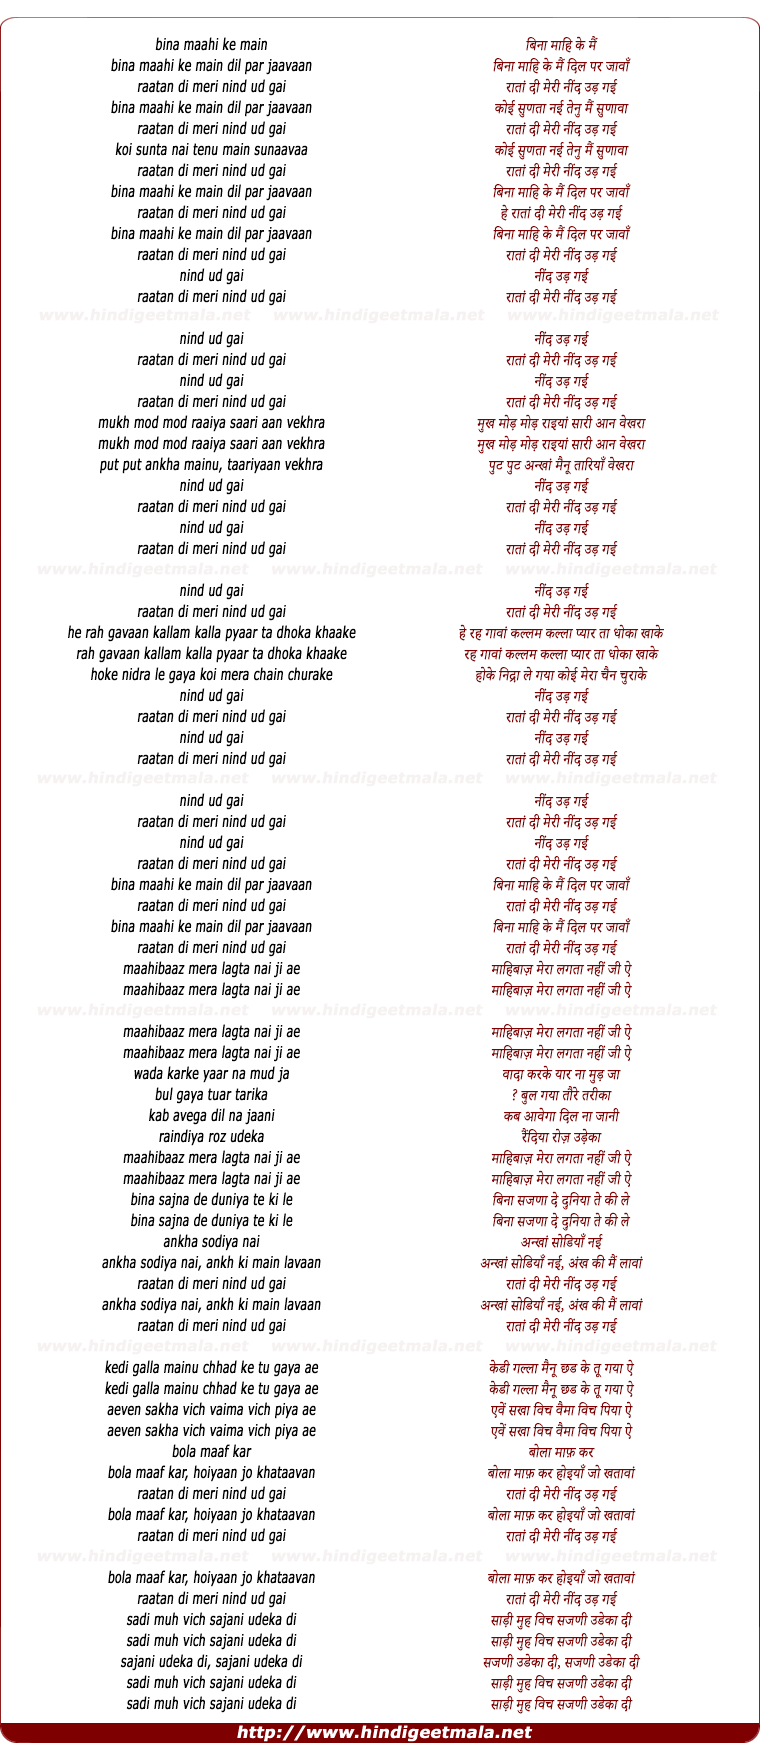 lyrics of song Raatan Di Meri Neend Ud Gayi